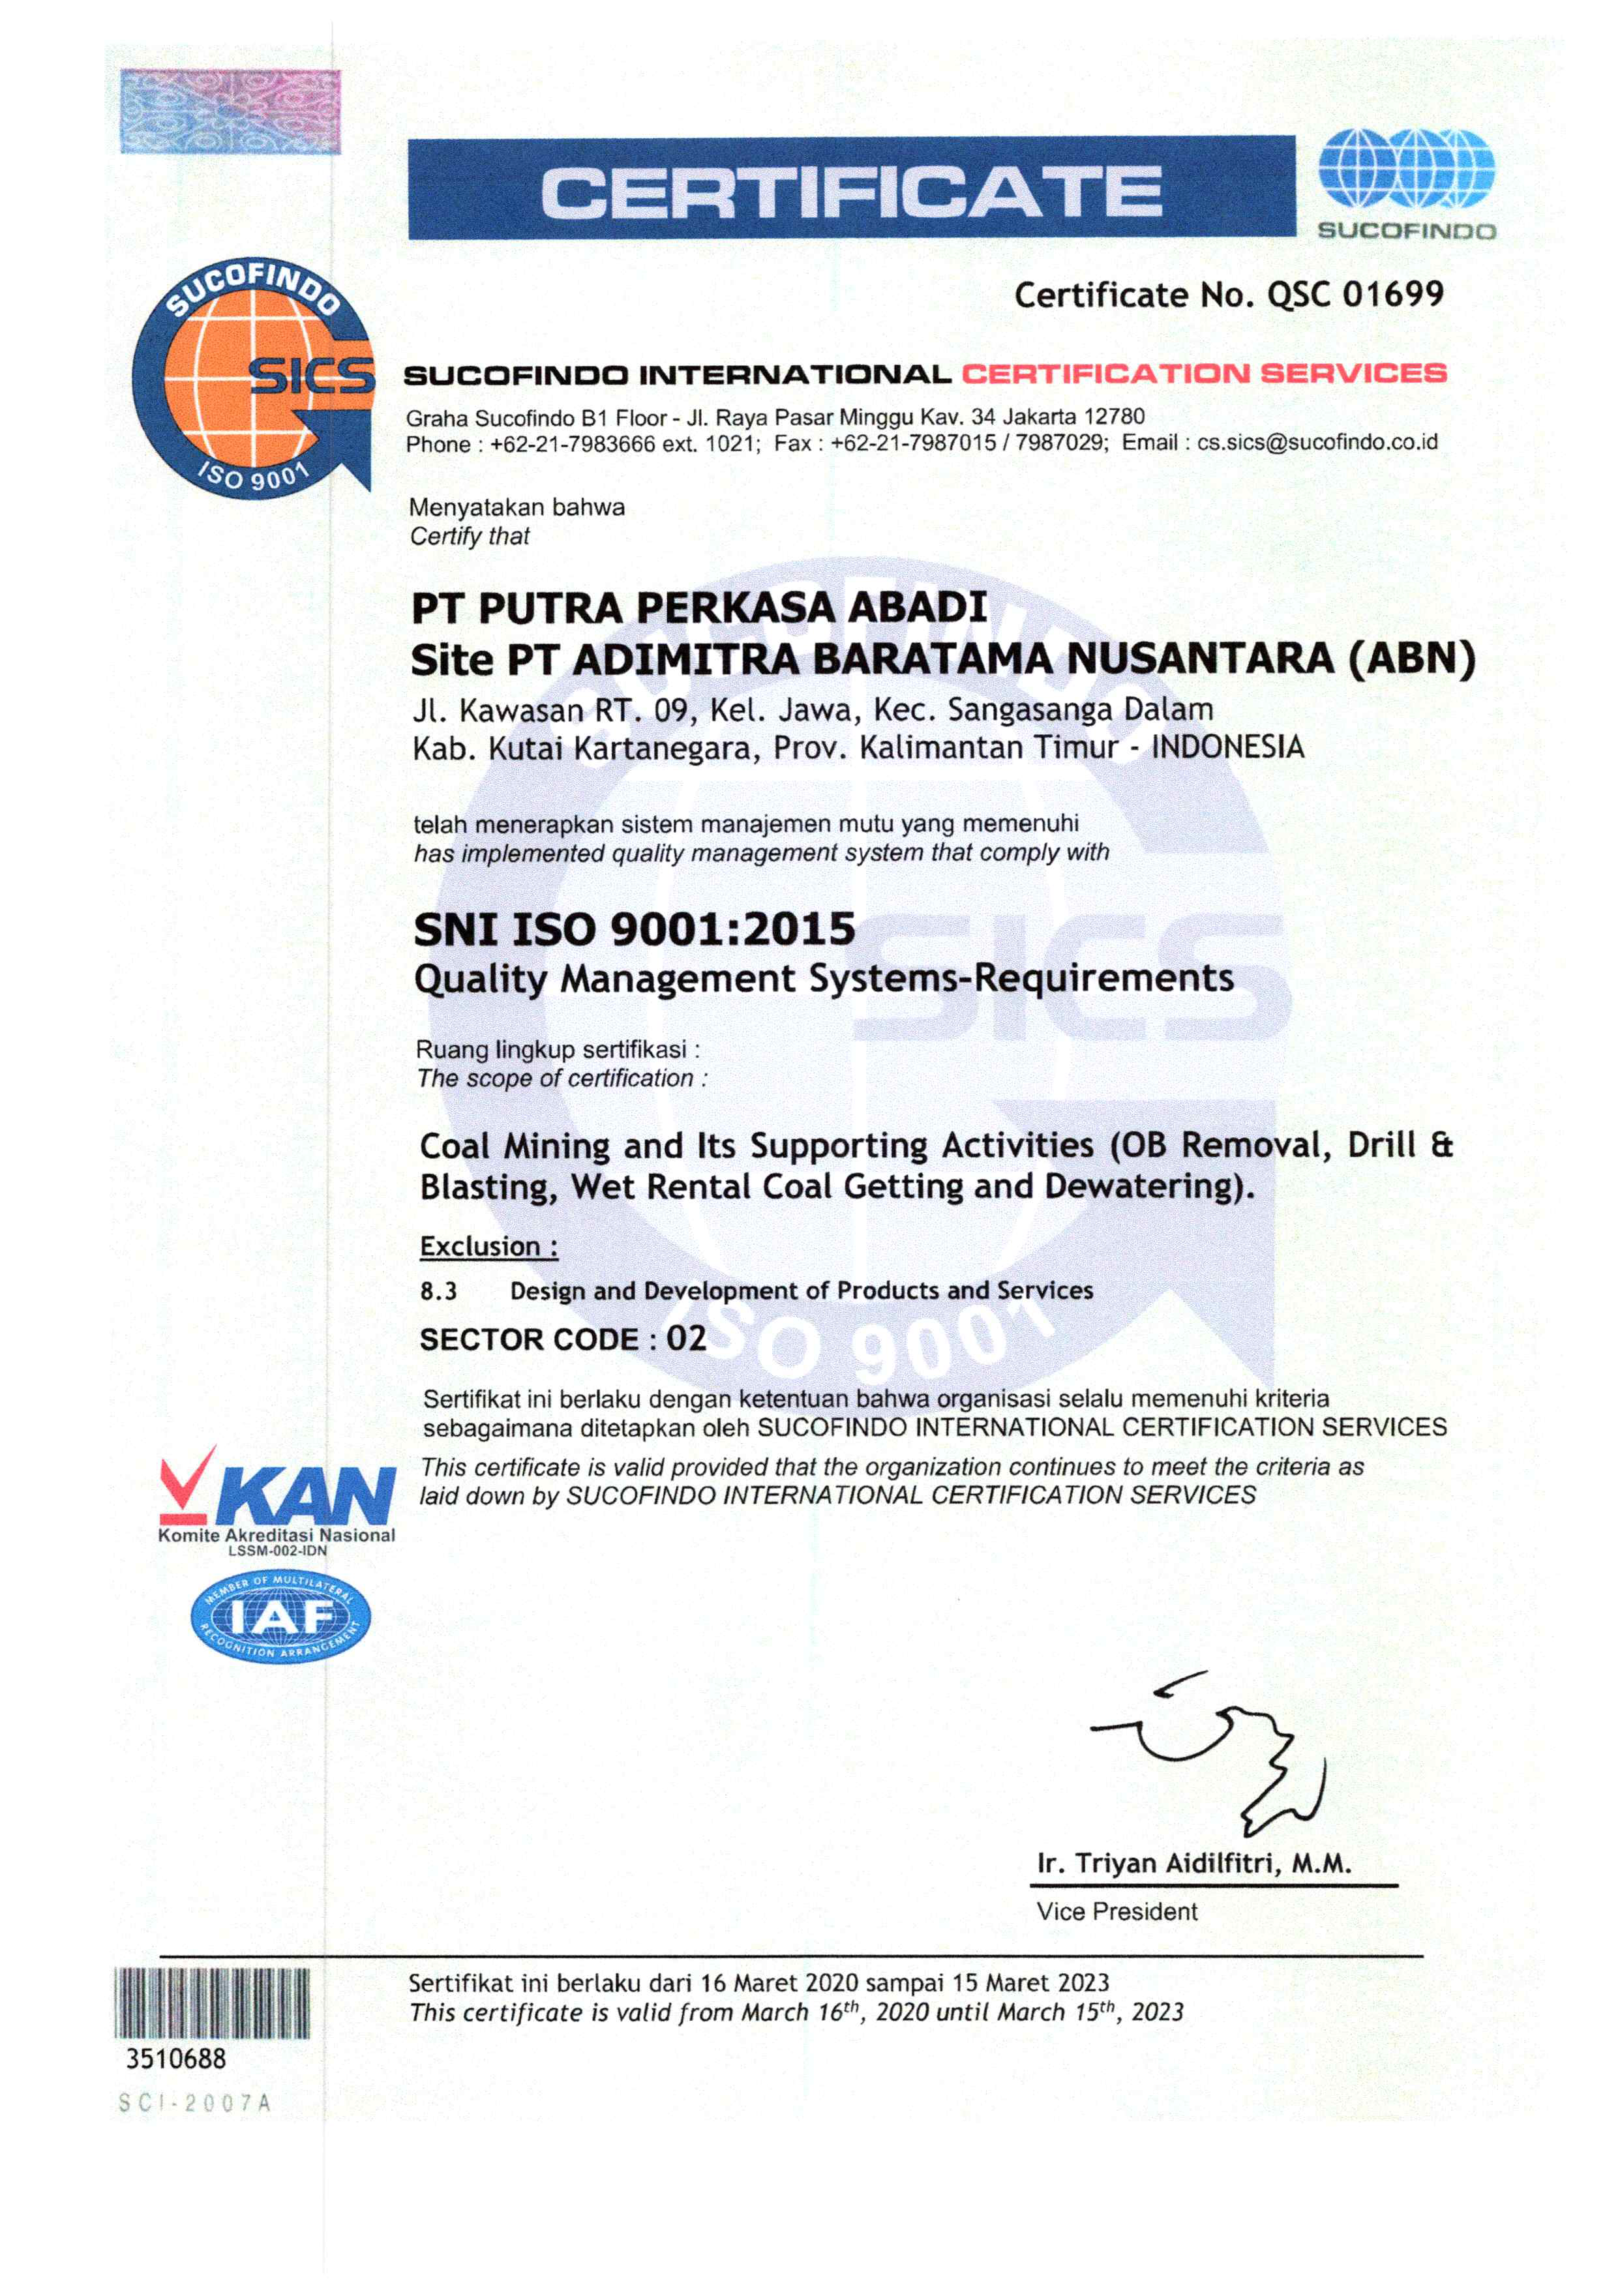 Sertifikat ISO 9001 PPA ABN_2020_